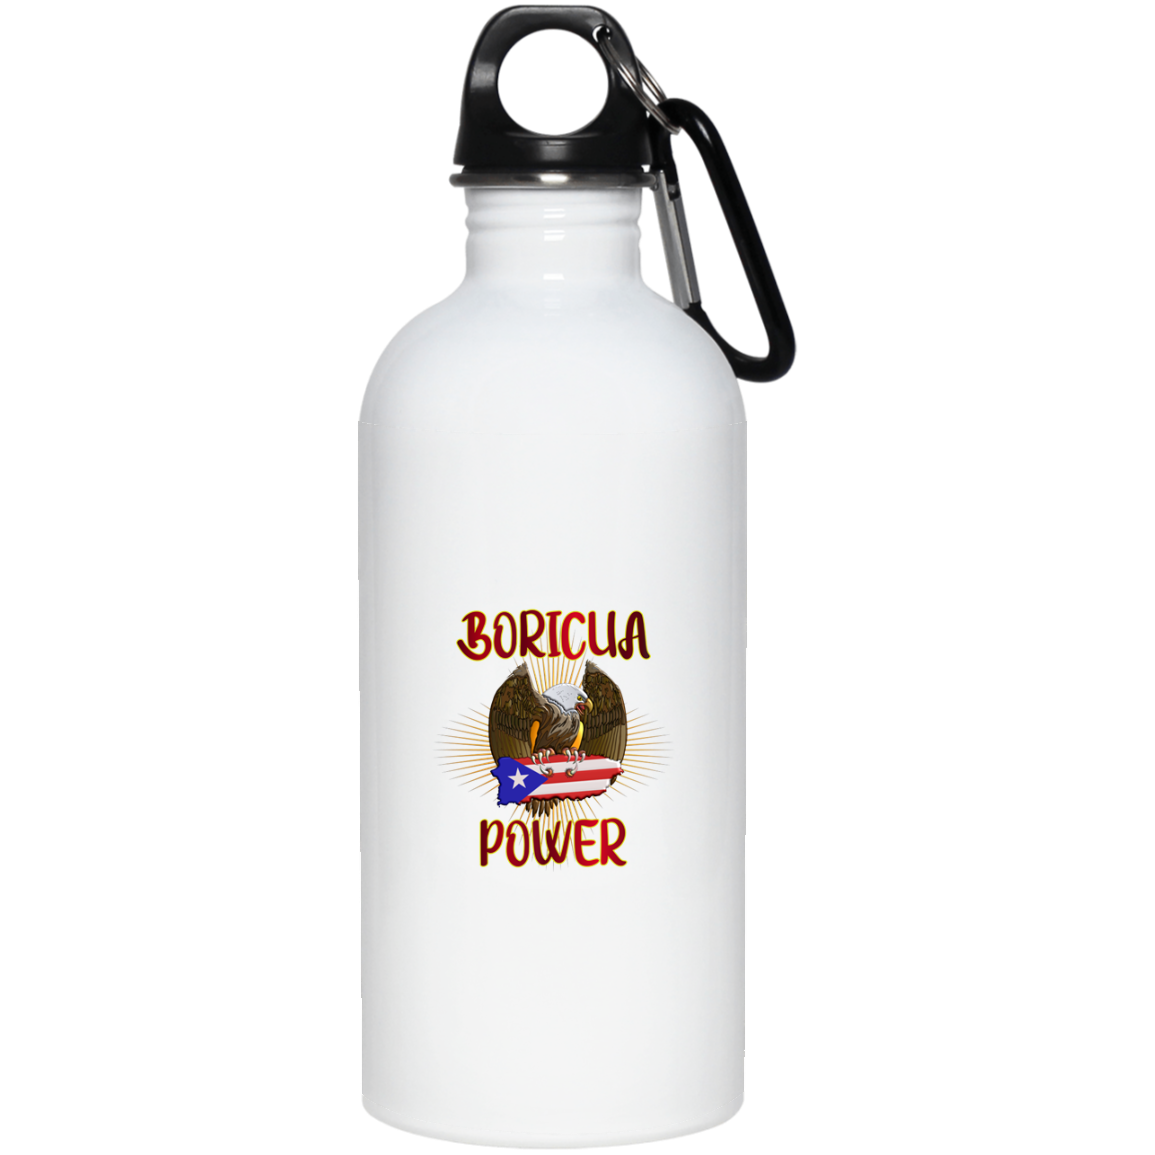 Bori Power 20 oz. Stainless Steel Water Bottle - Puerto Rican Pride